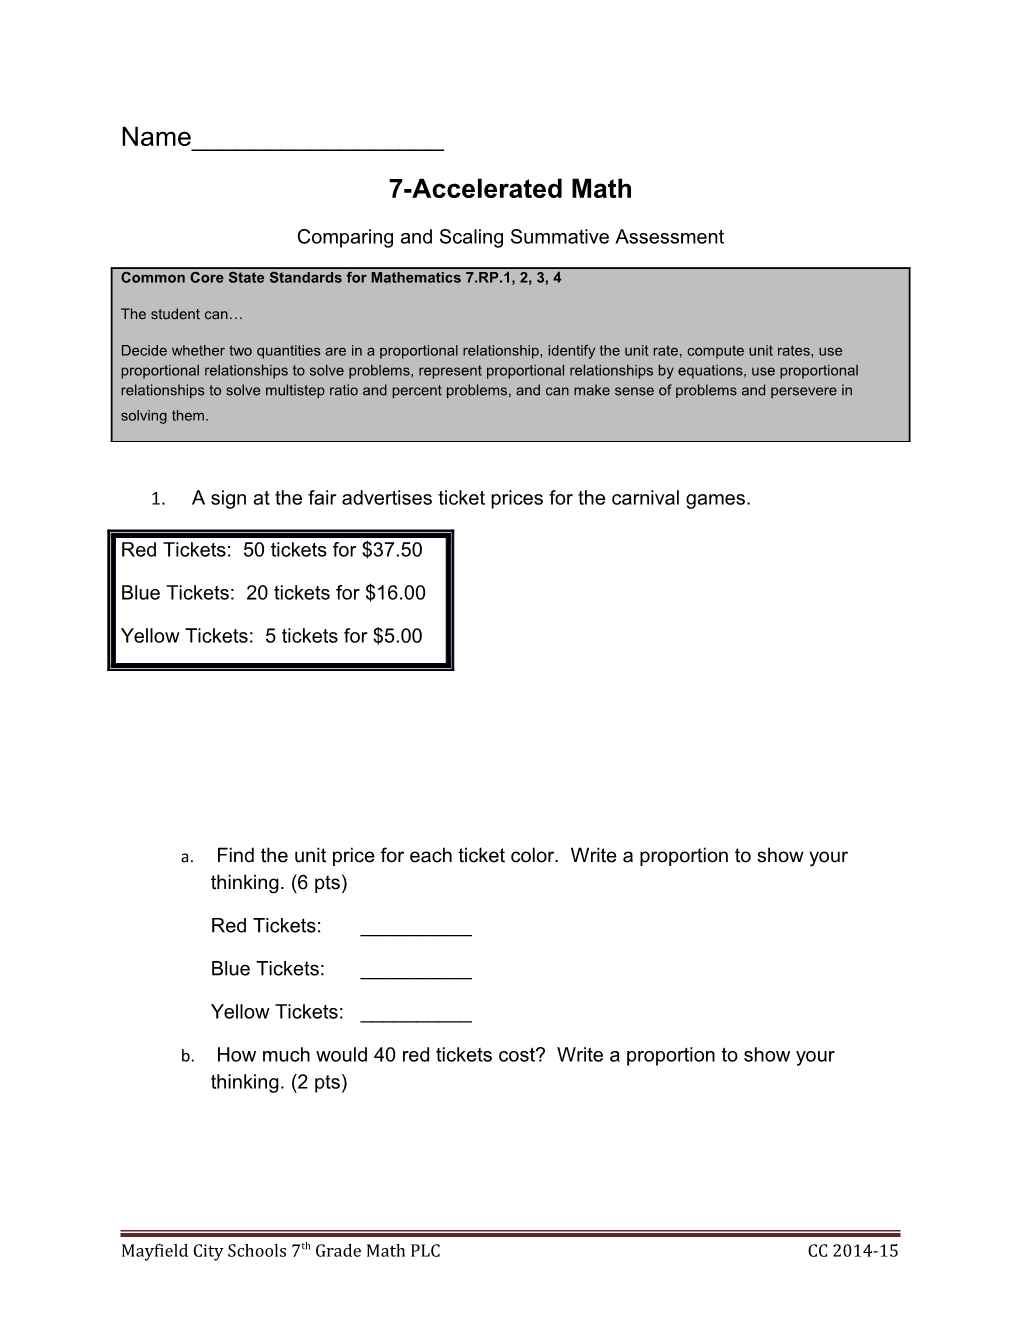 7-Accelerated Math